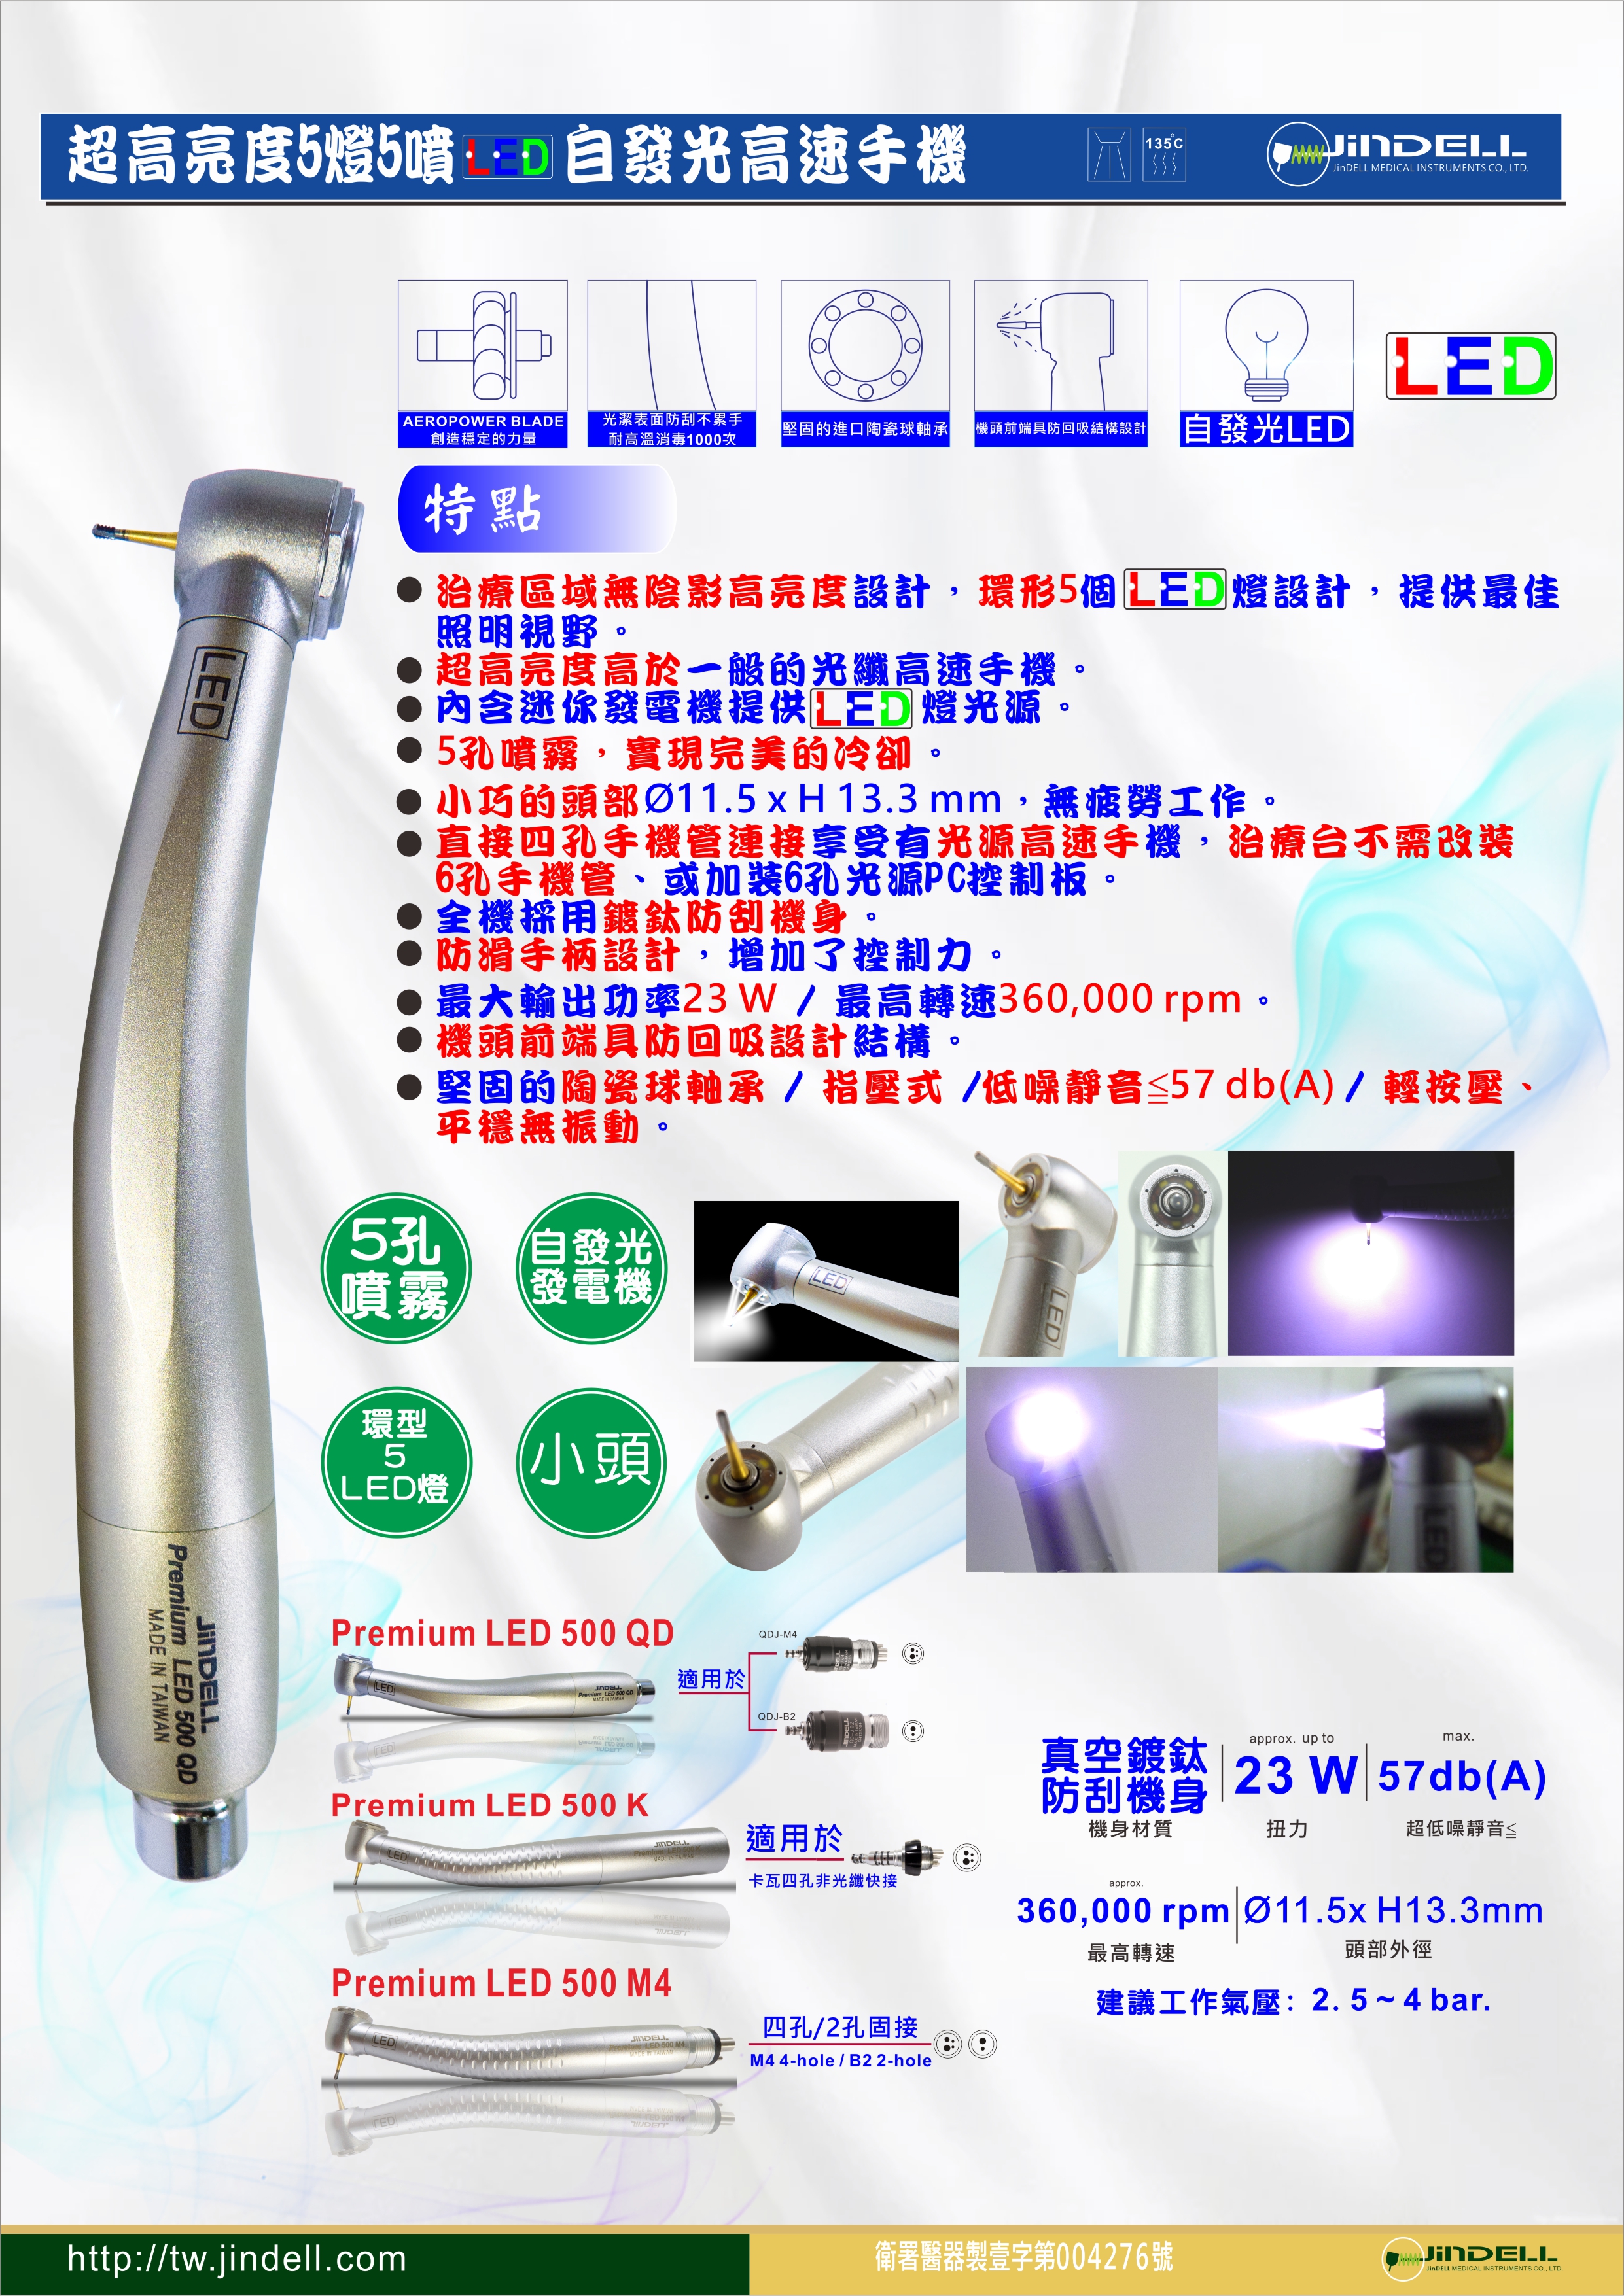 PREMIUM LED 500 QD -5燈5噴LED自發光高速手機